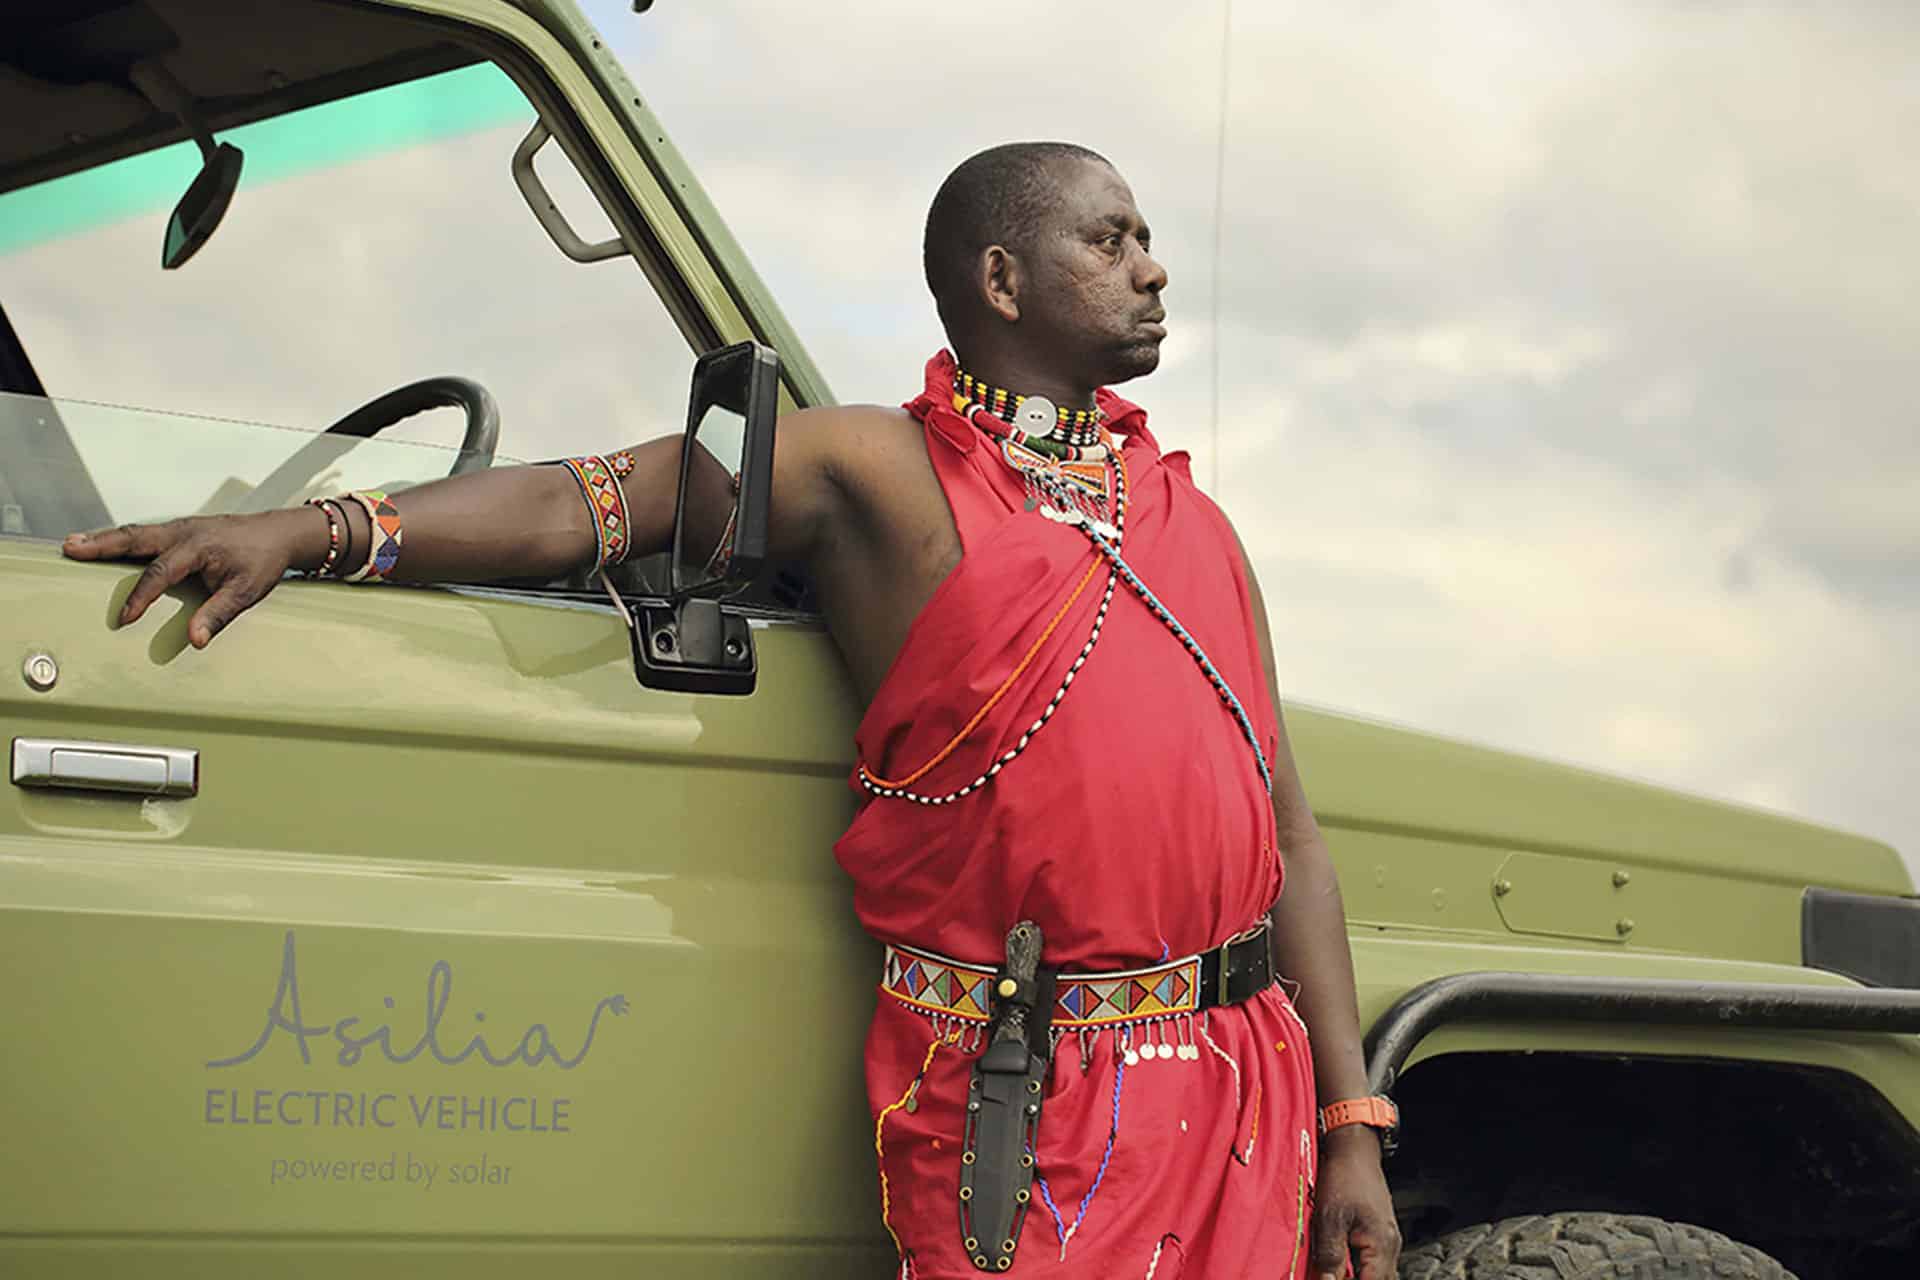 A Maasai guide leaning on an electric safari vehicle in Kenya